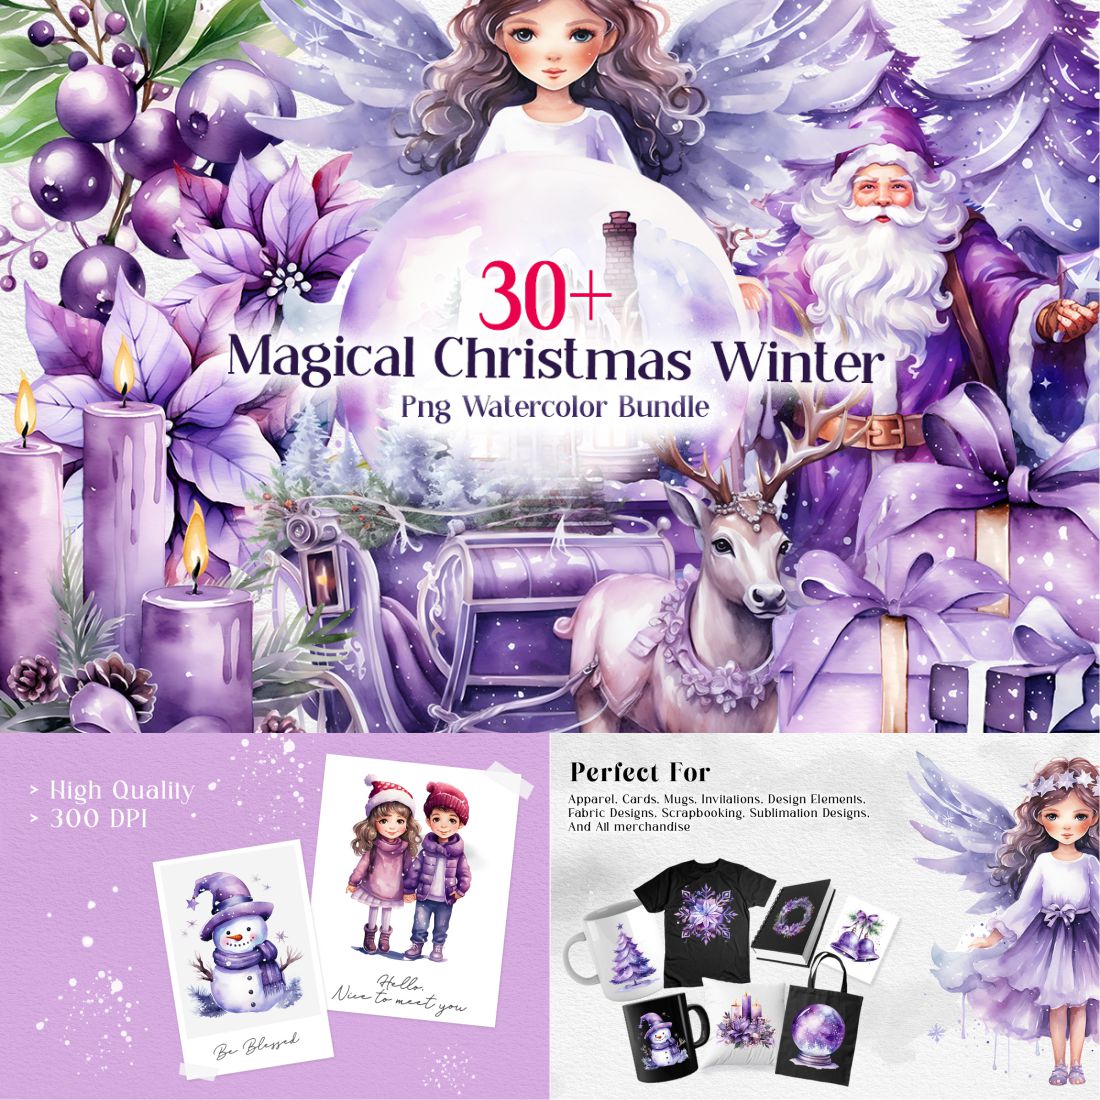 Magical Christmas Winter Sublimation Watercolor Bundle cover image.